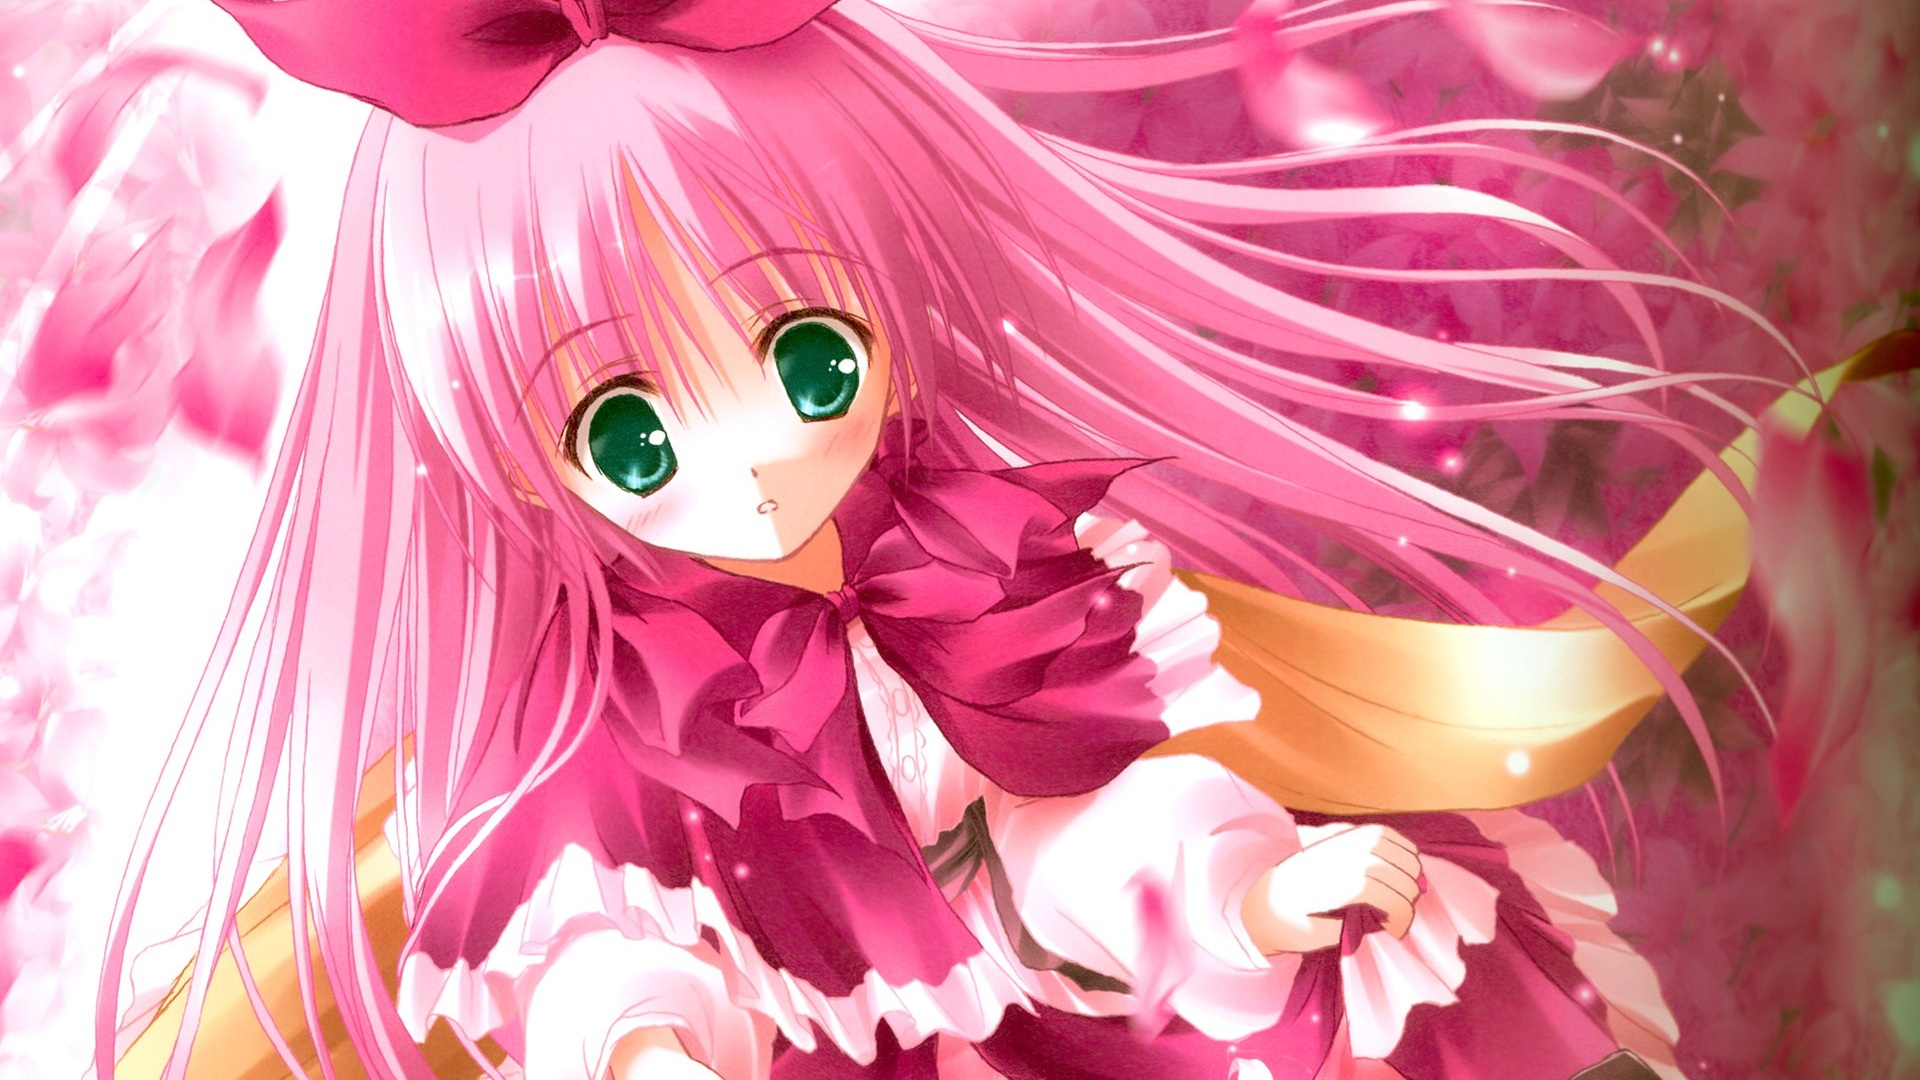 Cute Pink Hair Anime Girl Wallpaper Desktop